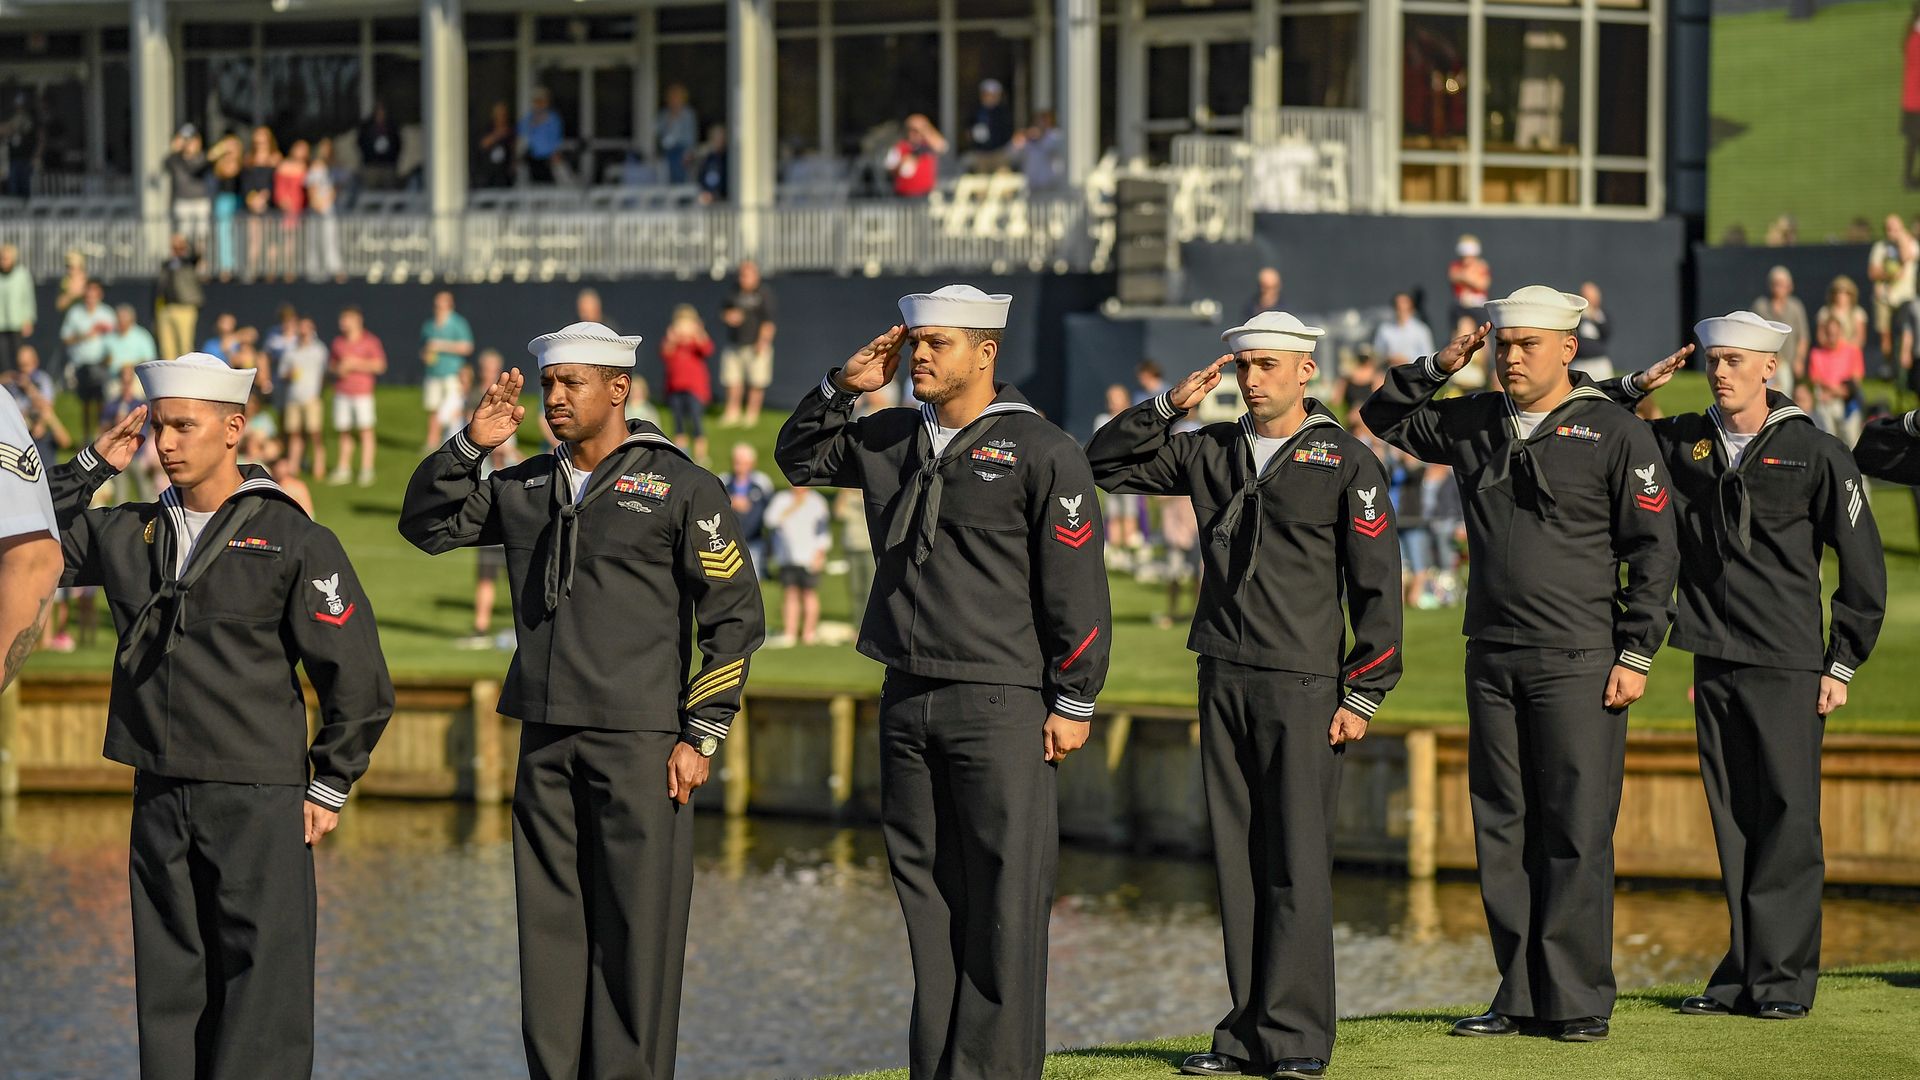 U.S. sailors saluting the flag